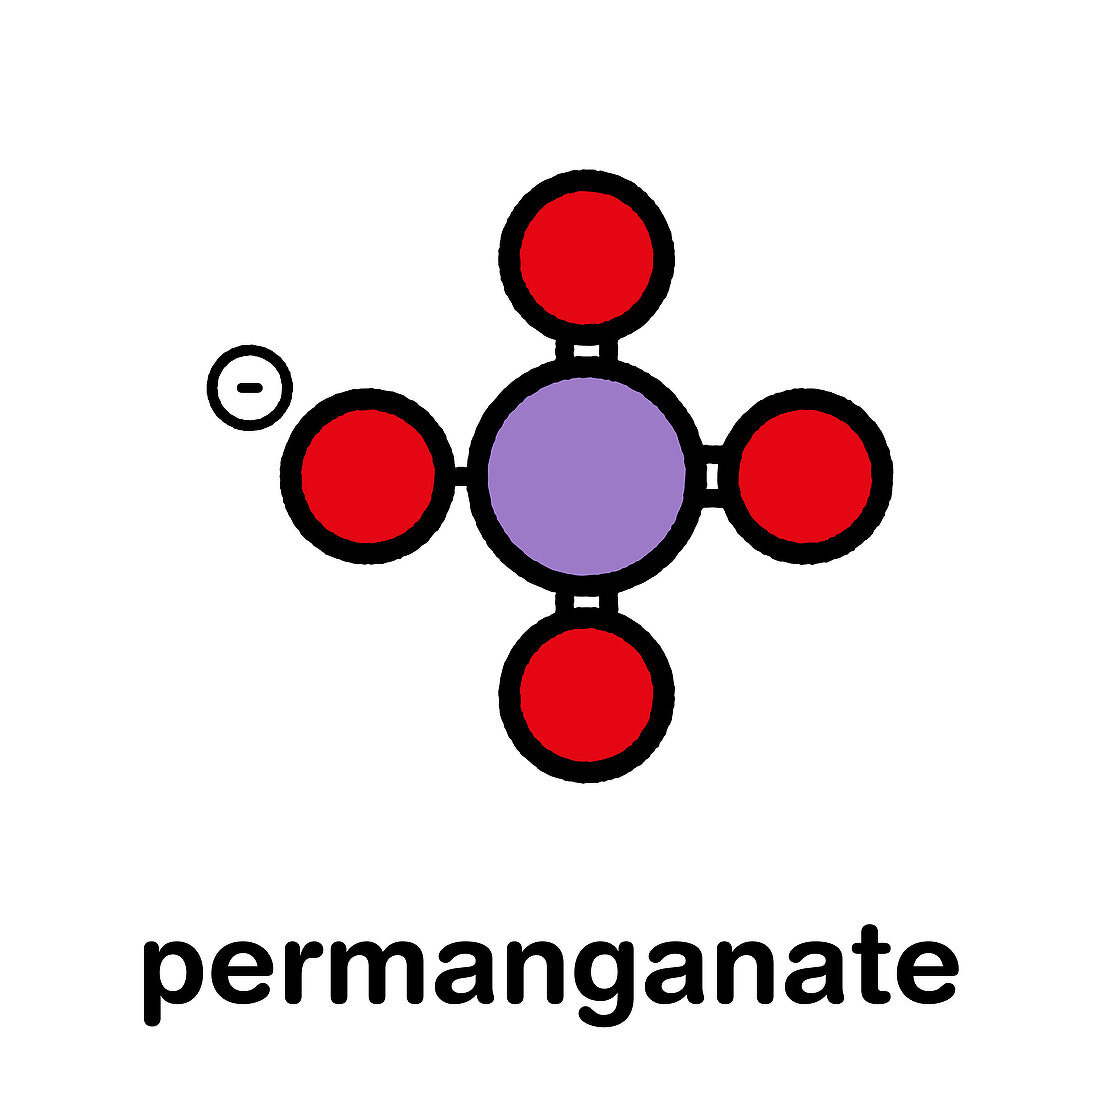 Permanganate anion chemical structure, illustration